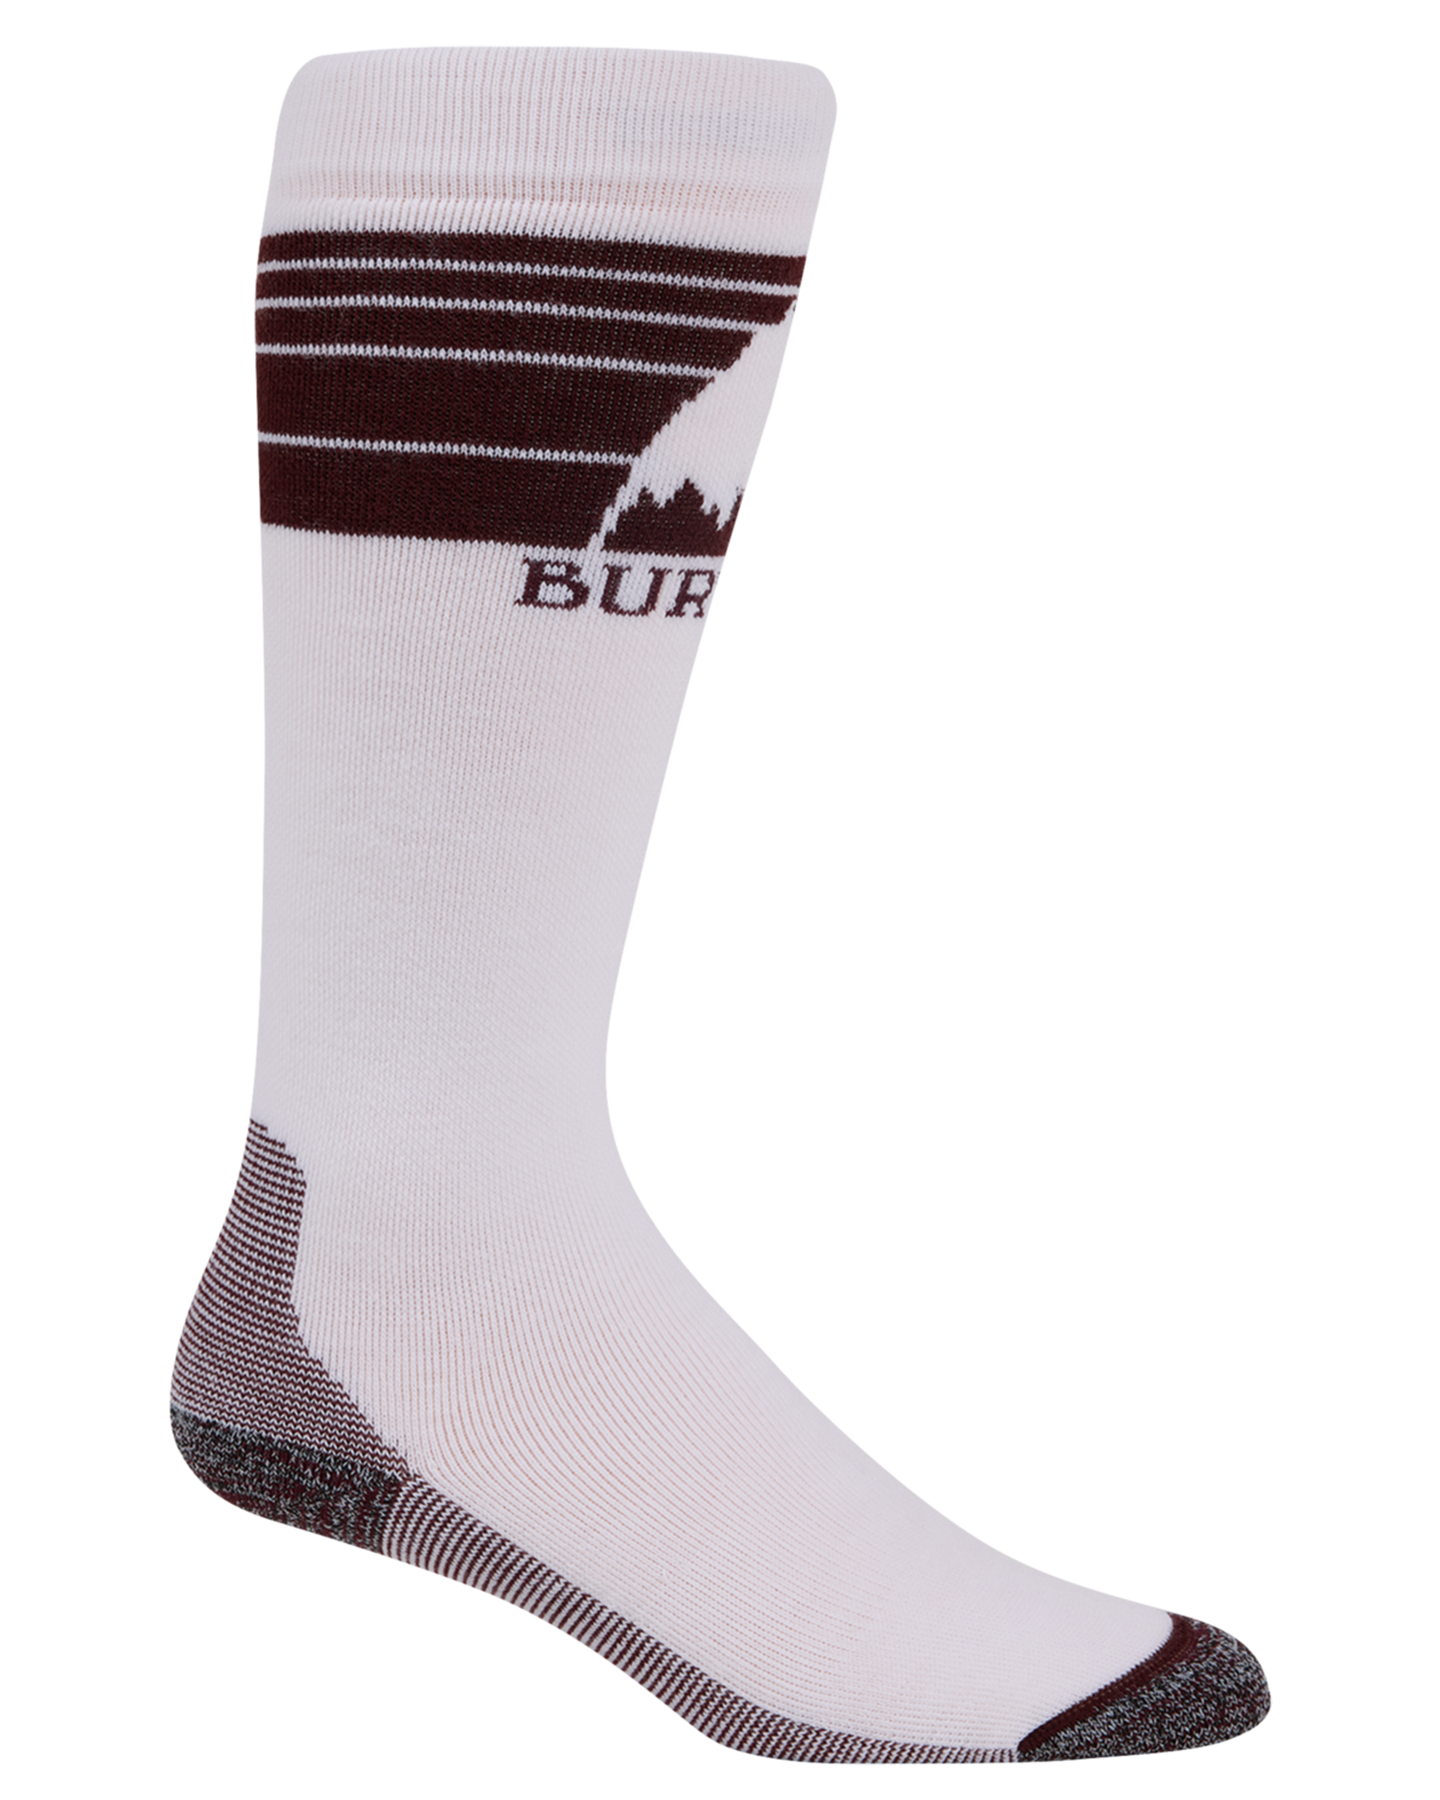 Burton Women's Emblem Midweight Socks - Stout White Socks - SnowSkiersWarehouse